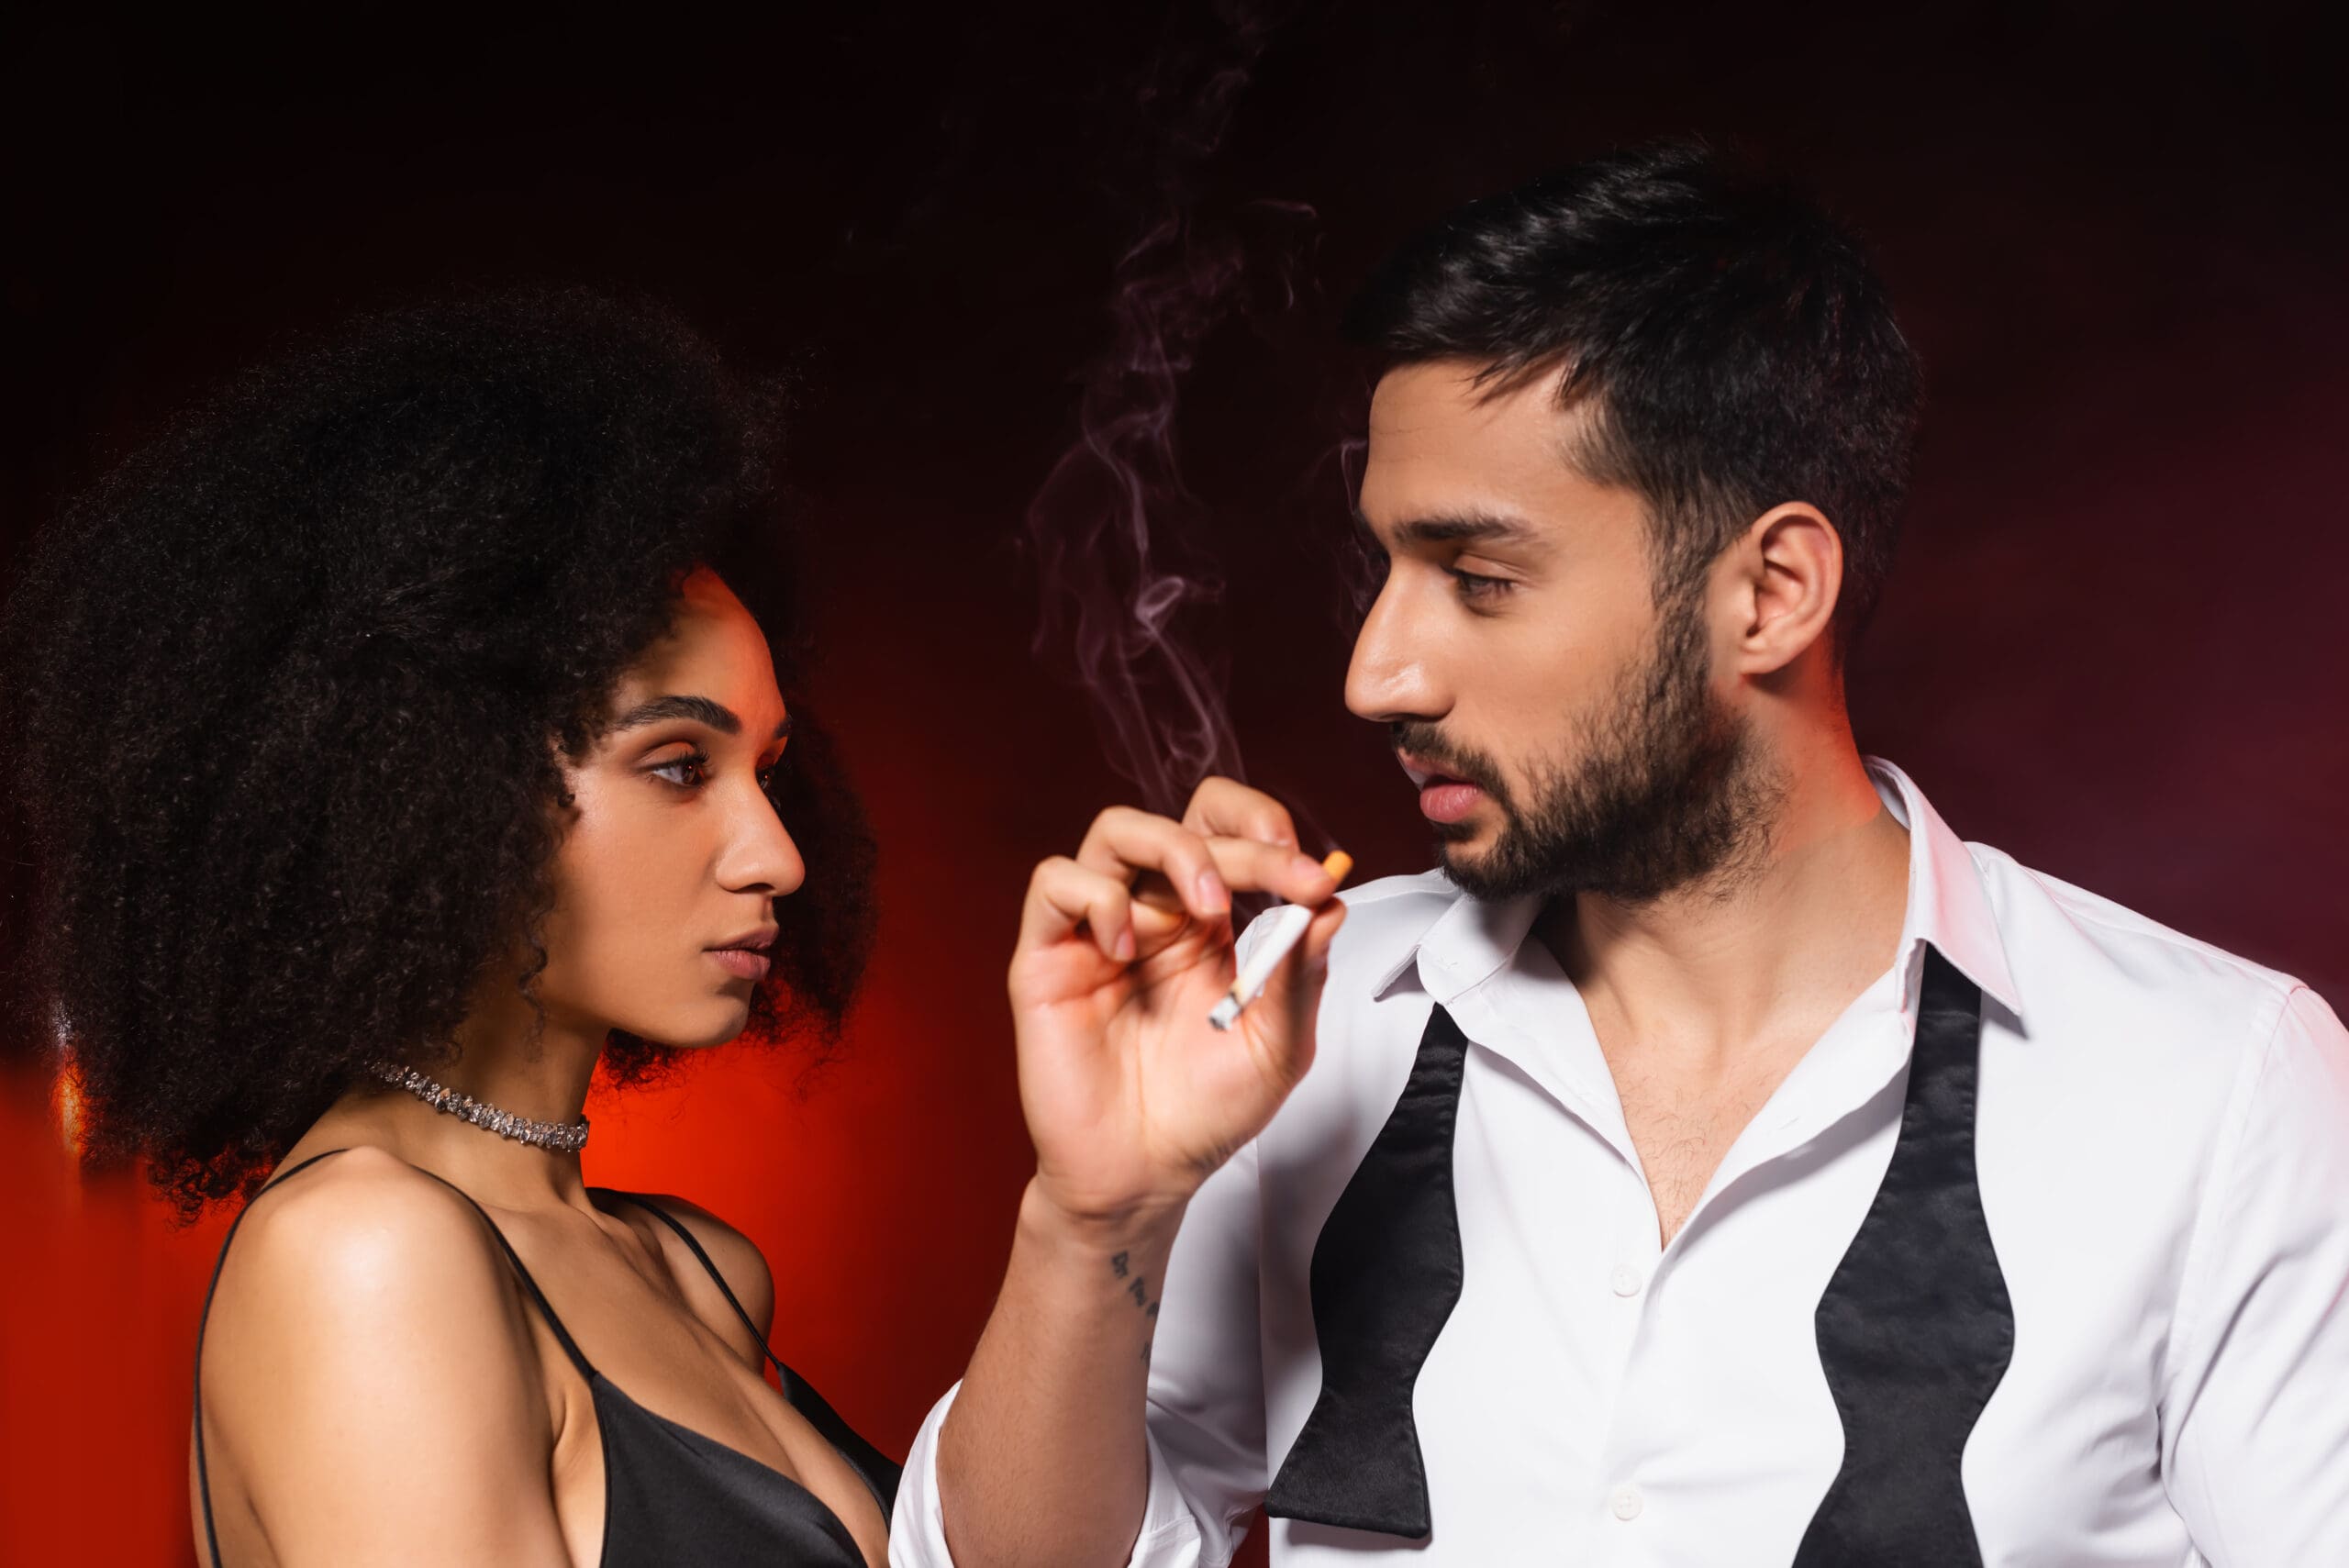 Smoking man and woman